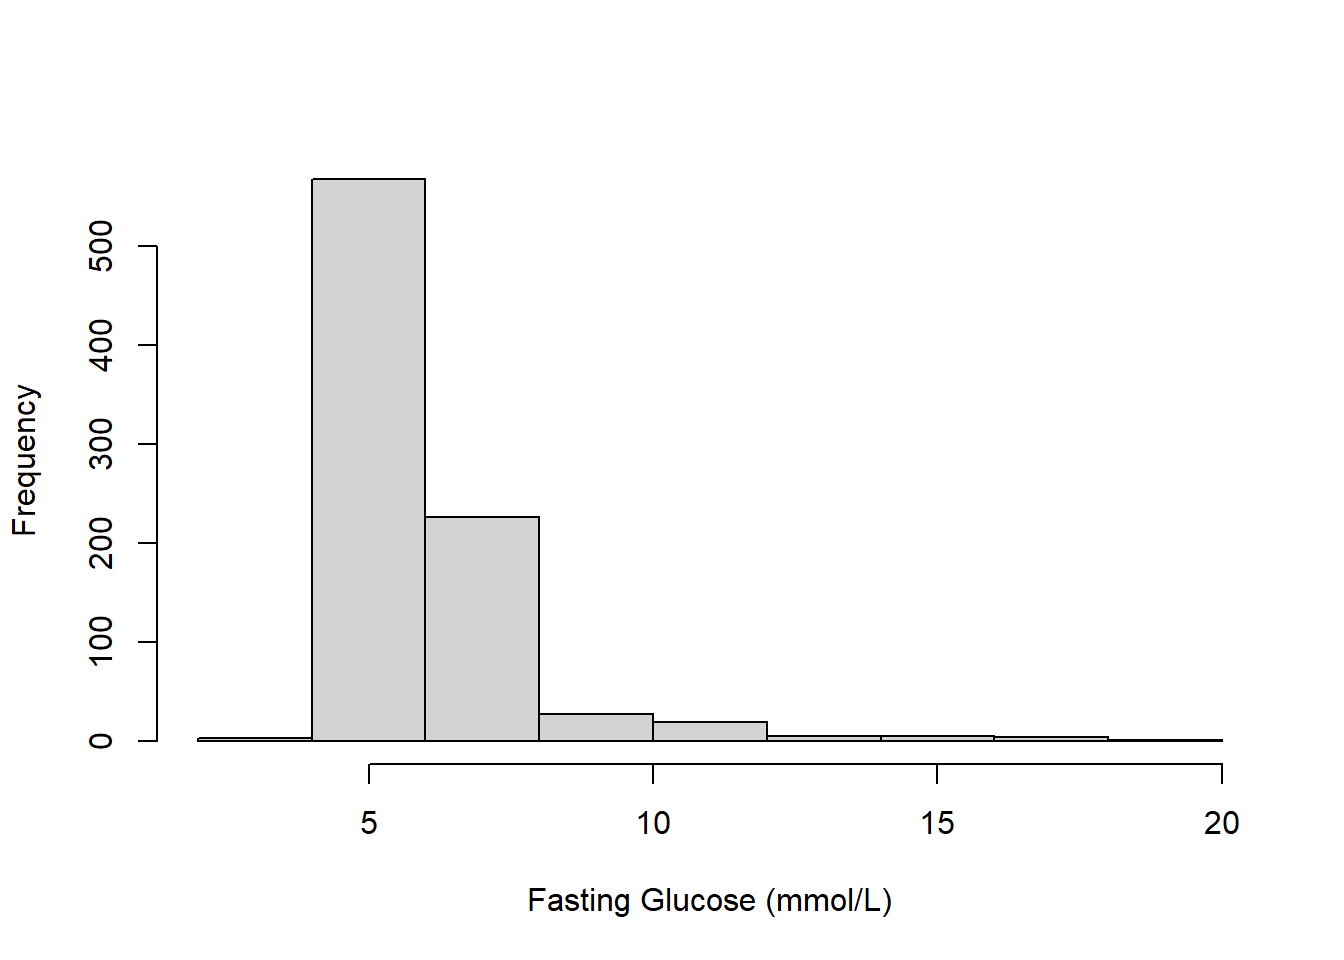 Histogram of Fasting Glucose (mmol/L)